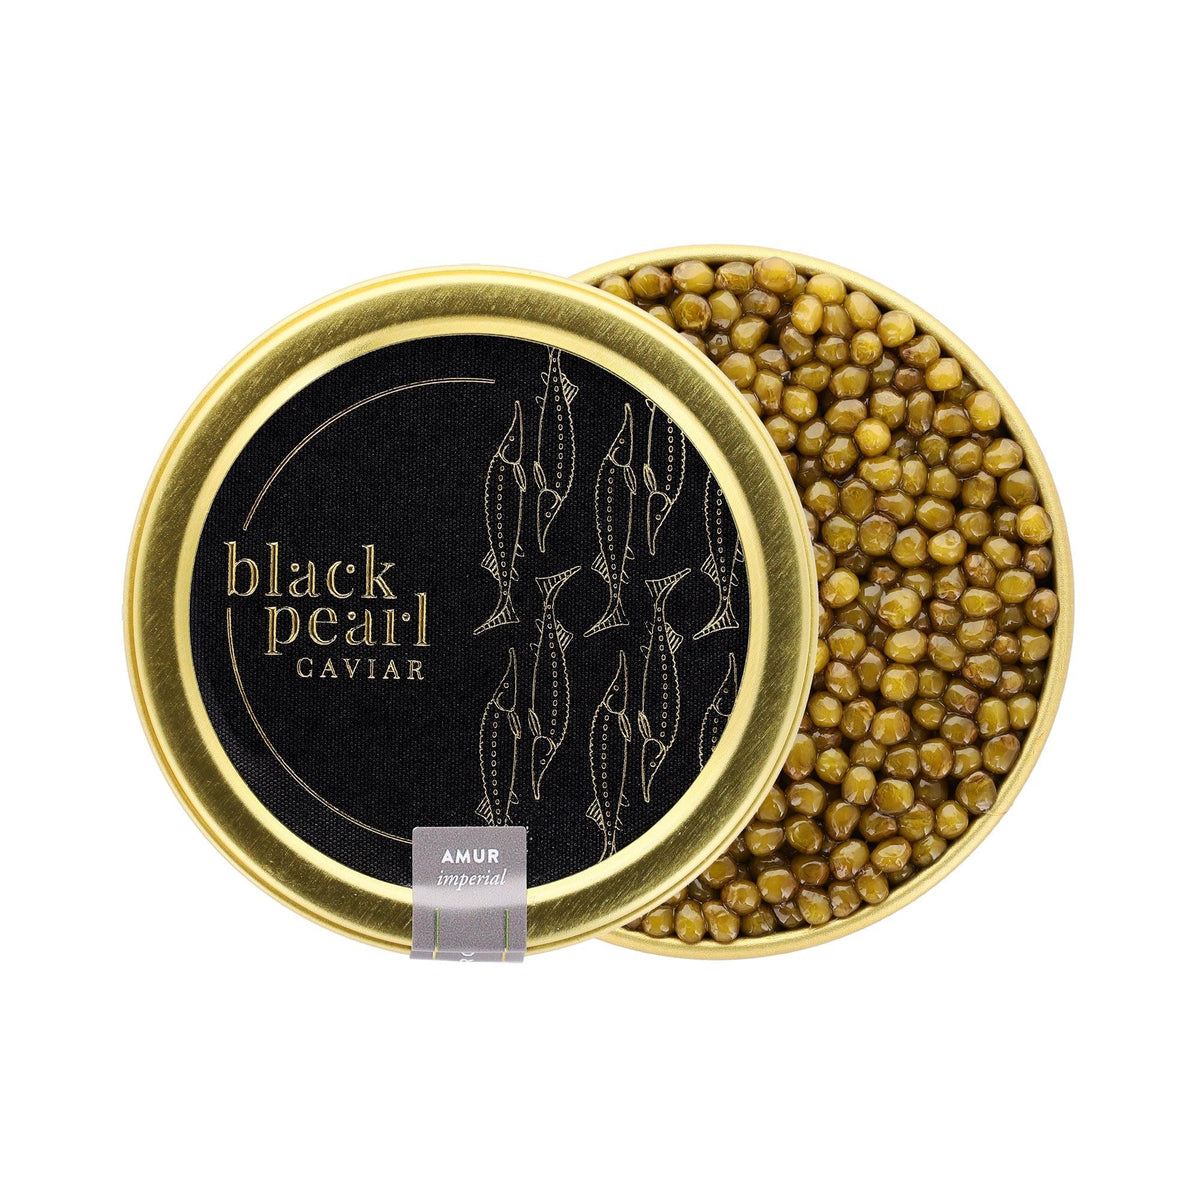 Caviar tin, large caviar, gold color roe, exclusive and rare selection.